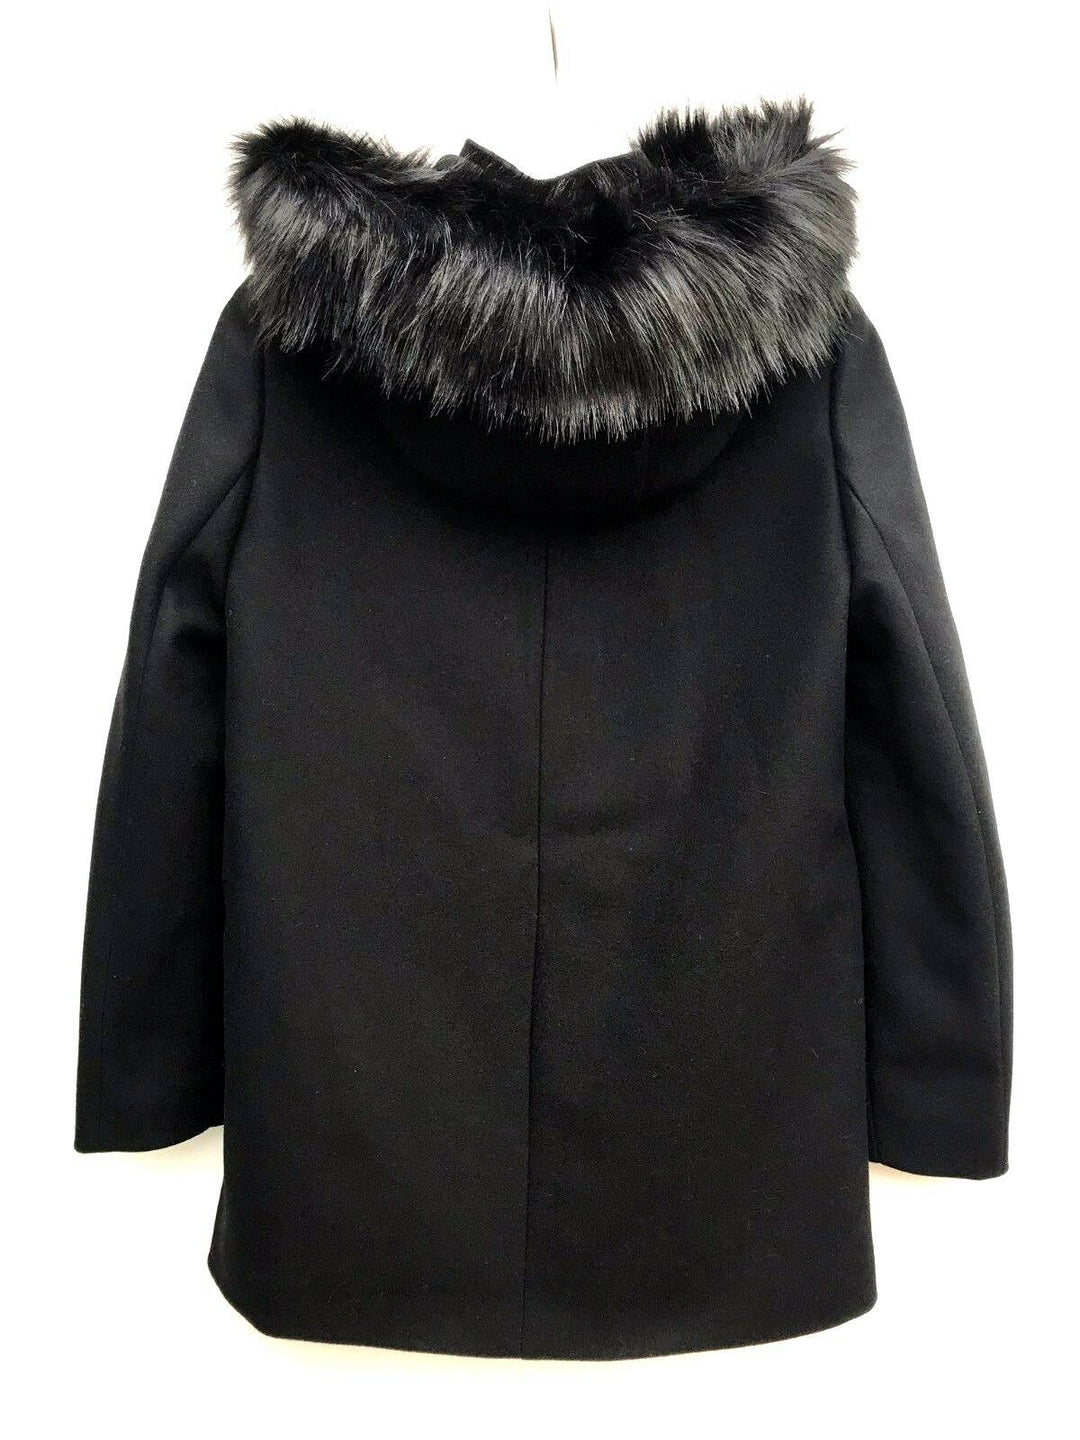 ZARA Duffle Coat Black Fur Hood